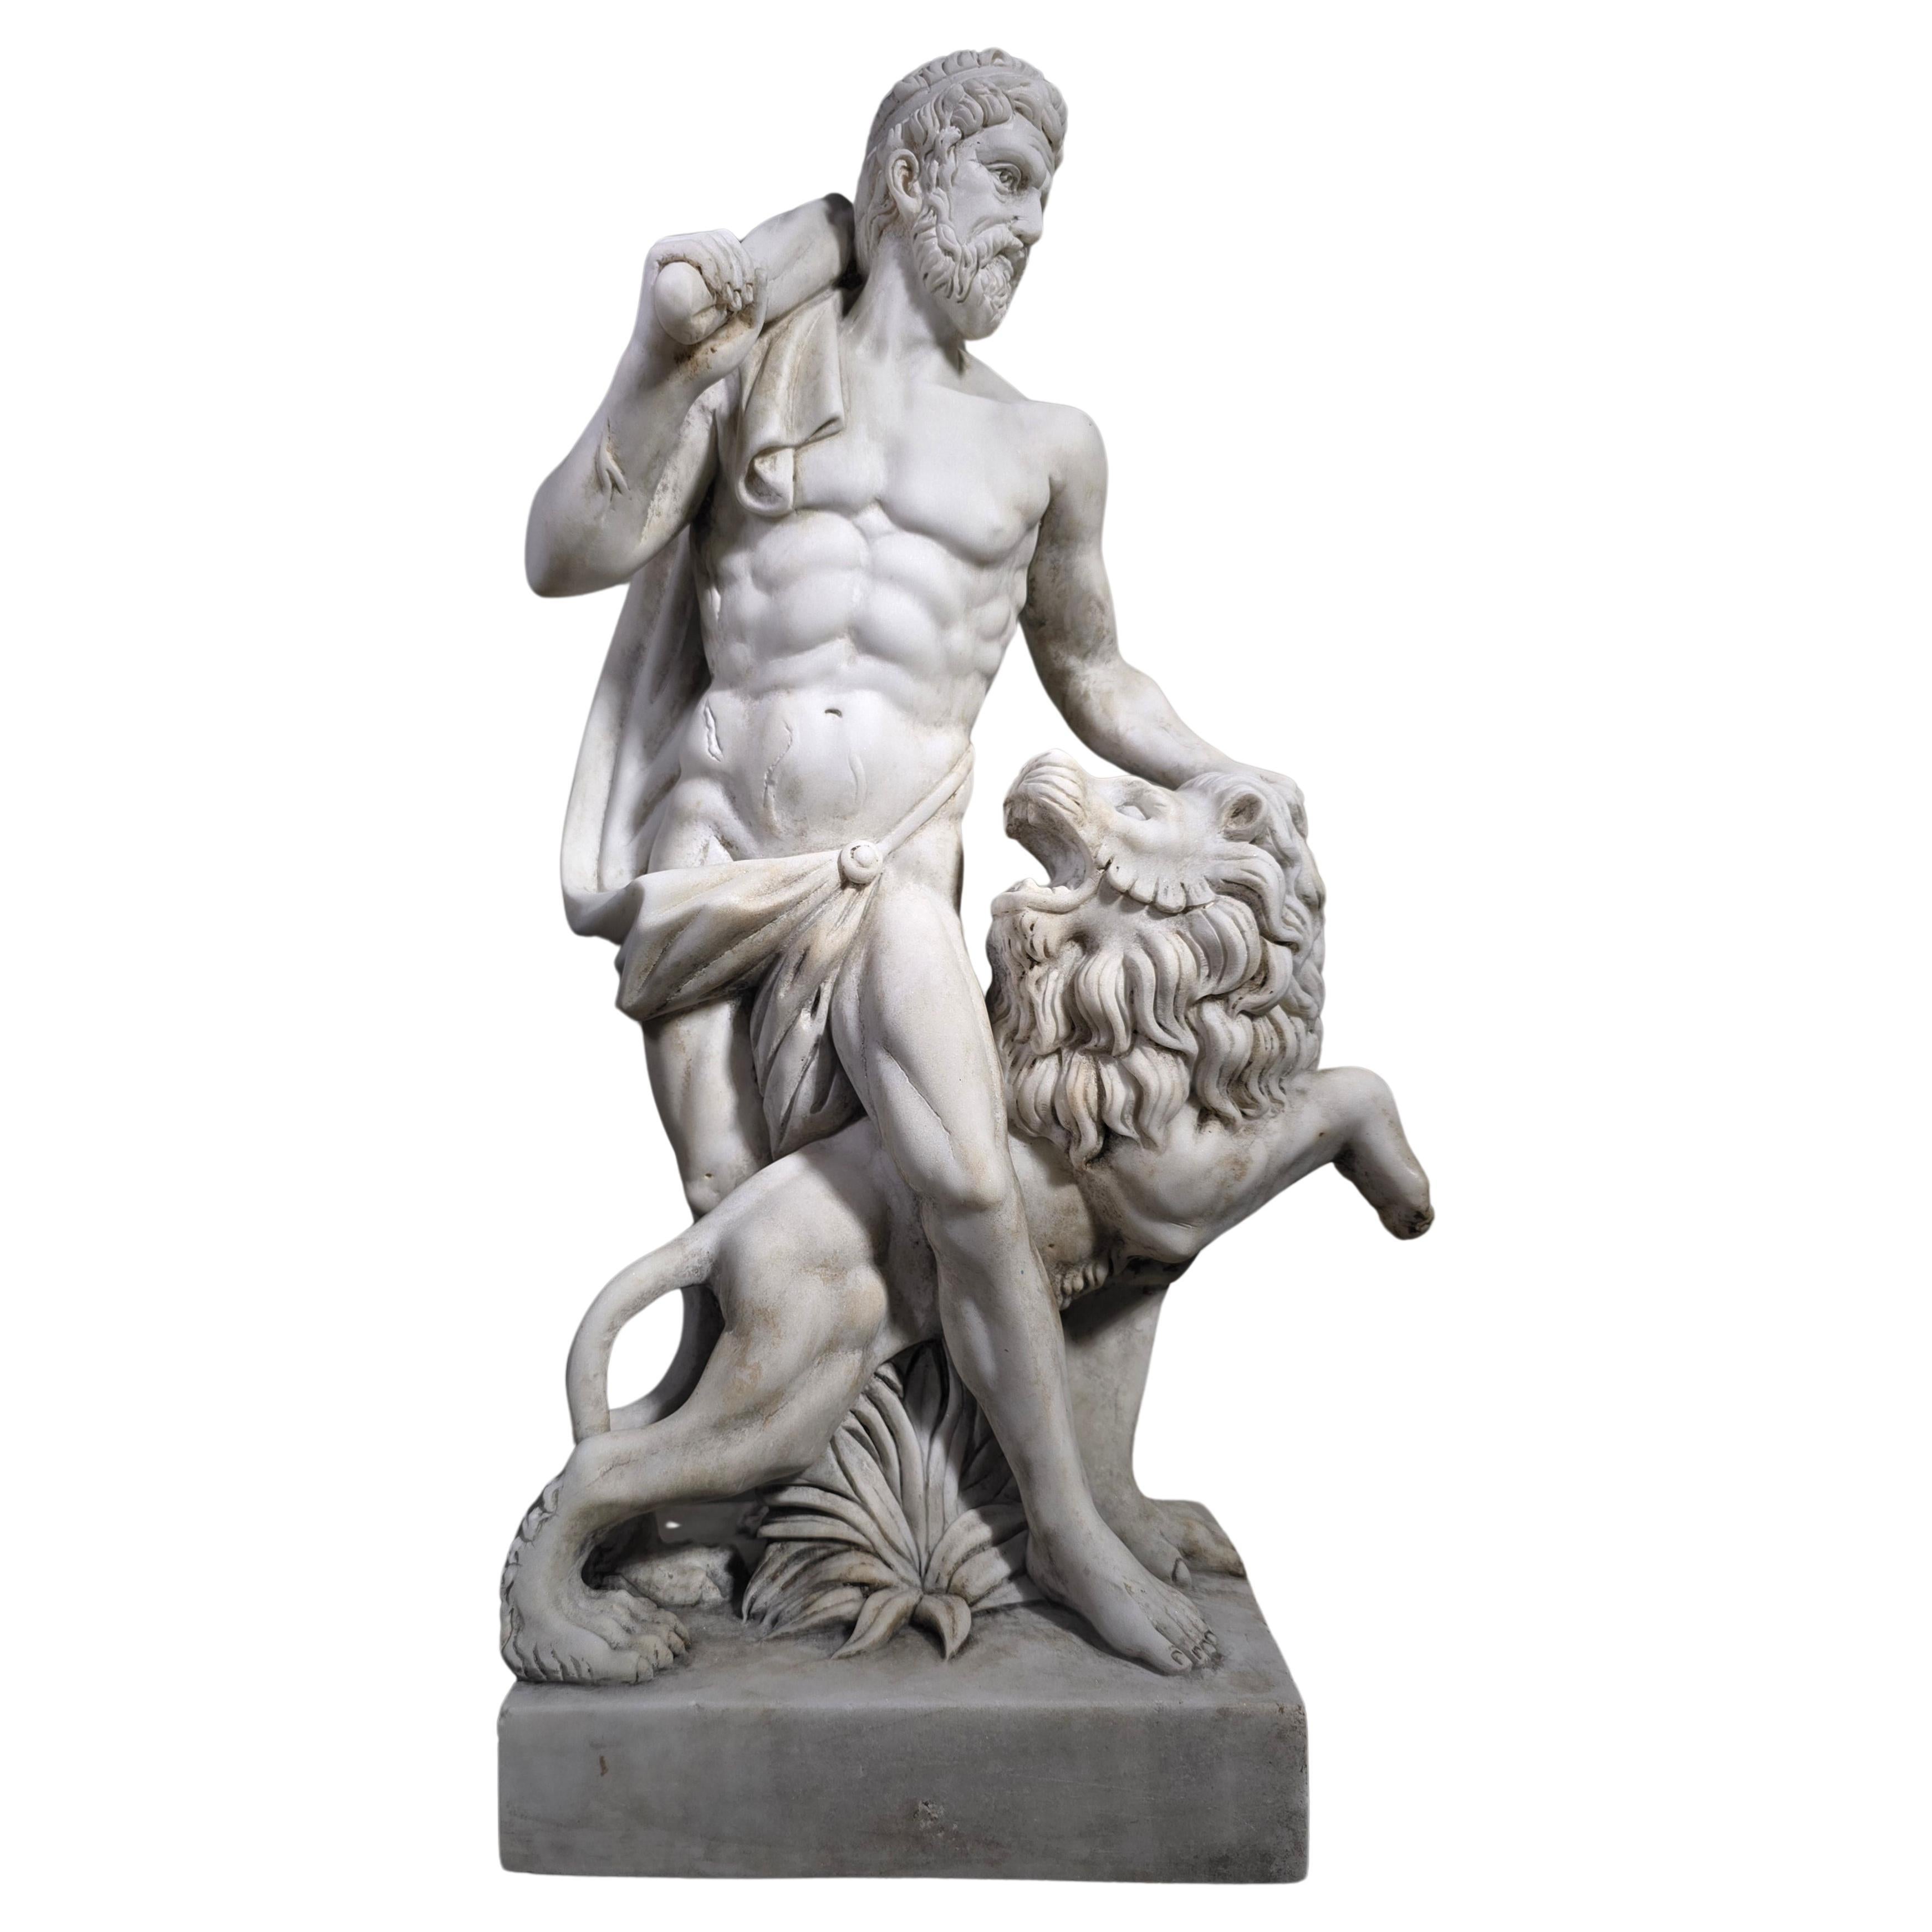 Elegant 19th Century White Carrara Marble Sculpture Depicting Hercules